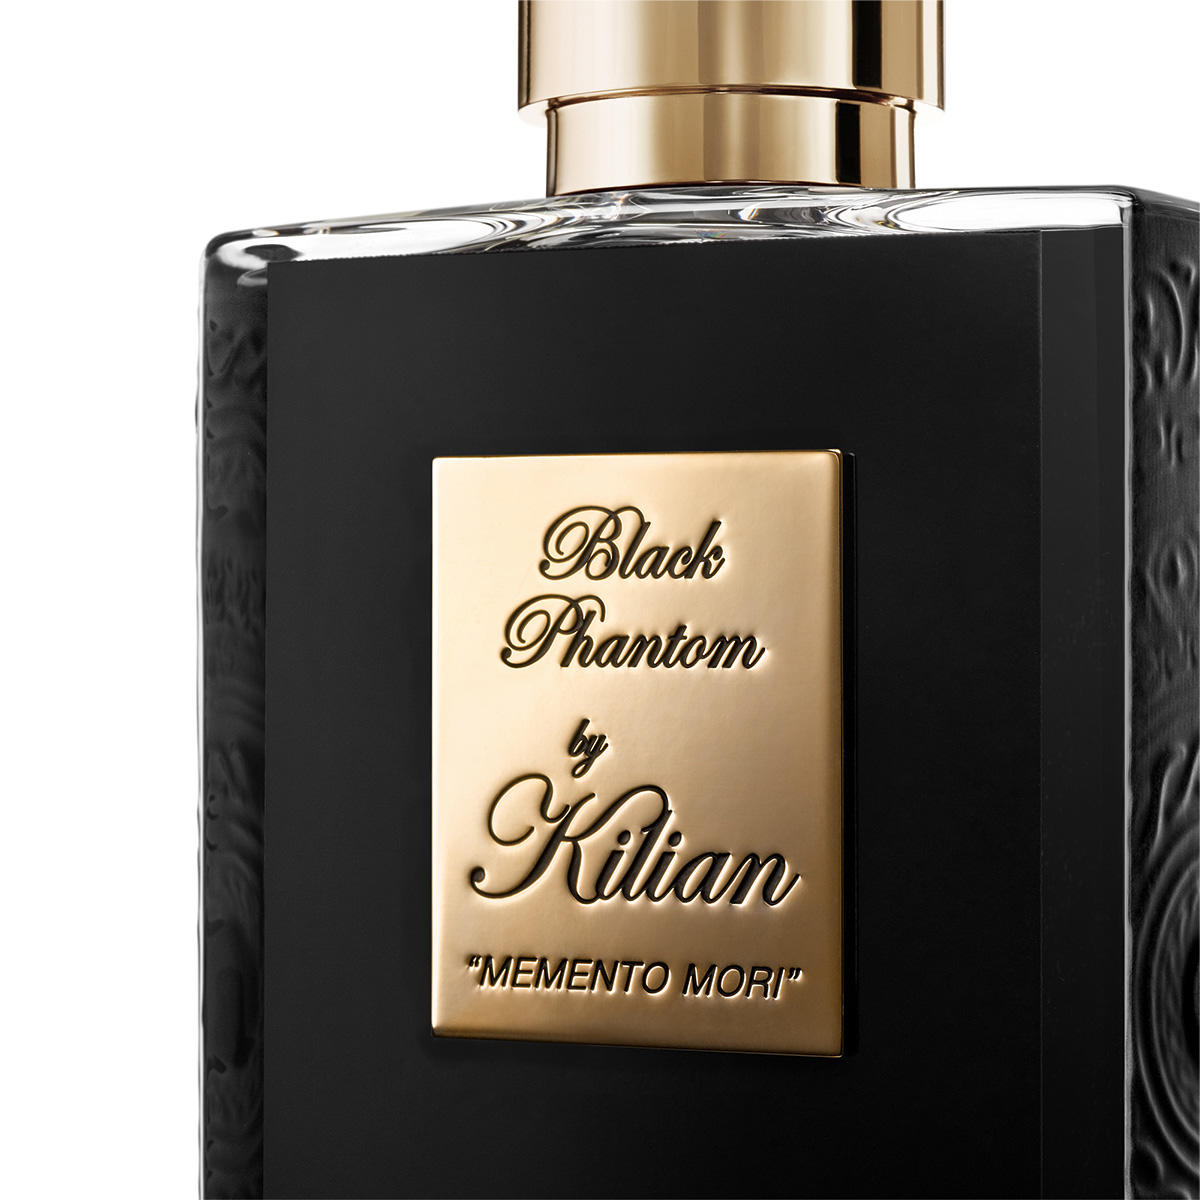 Kilian Paris Black Phantom "Memento Mori" Eau de Parfum nachfüllbar mit Clutch  - 2